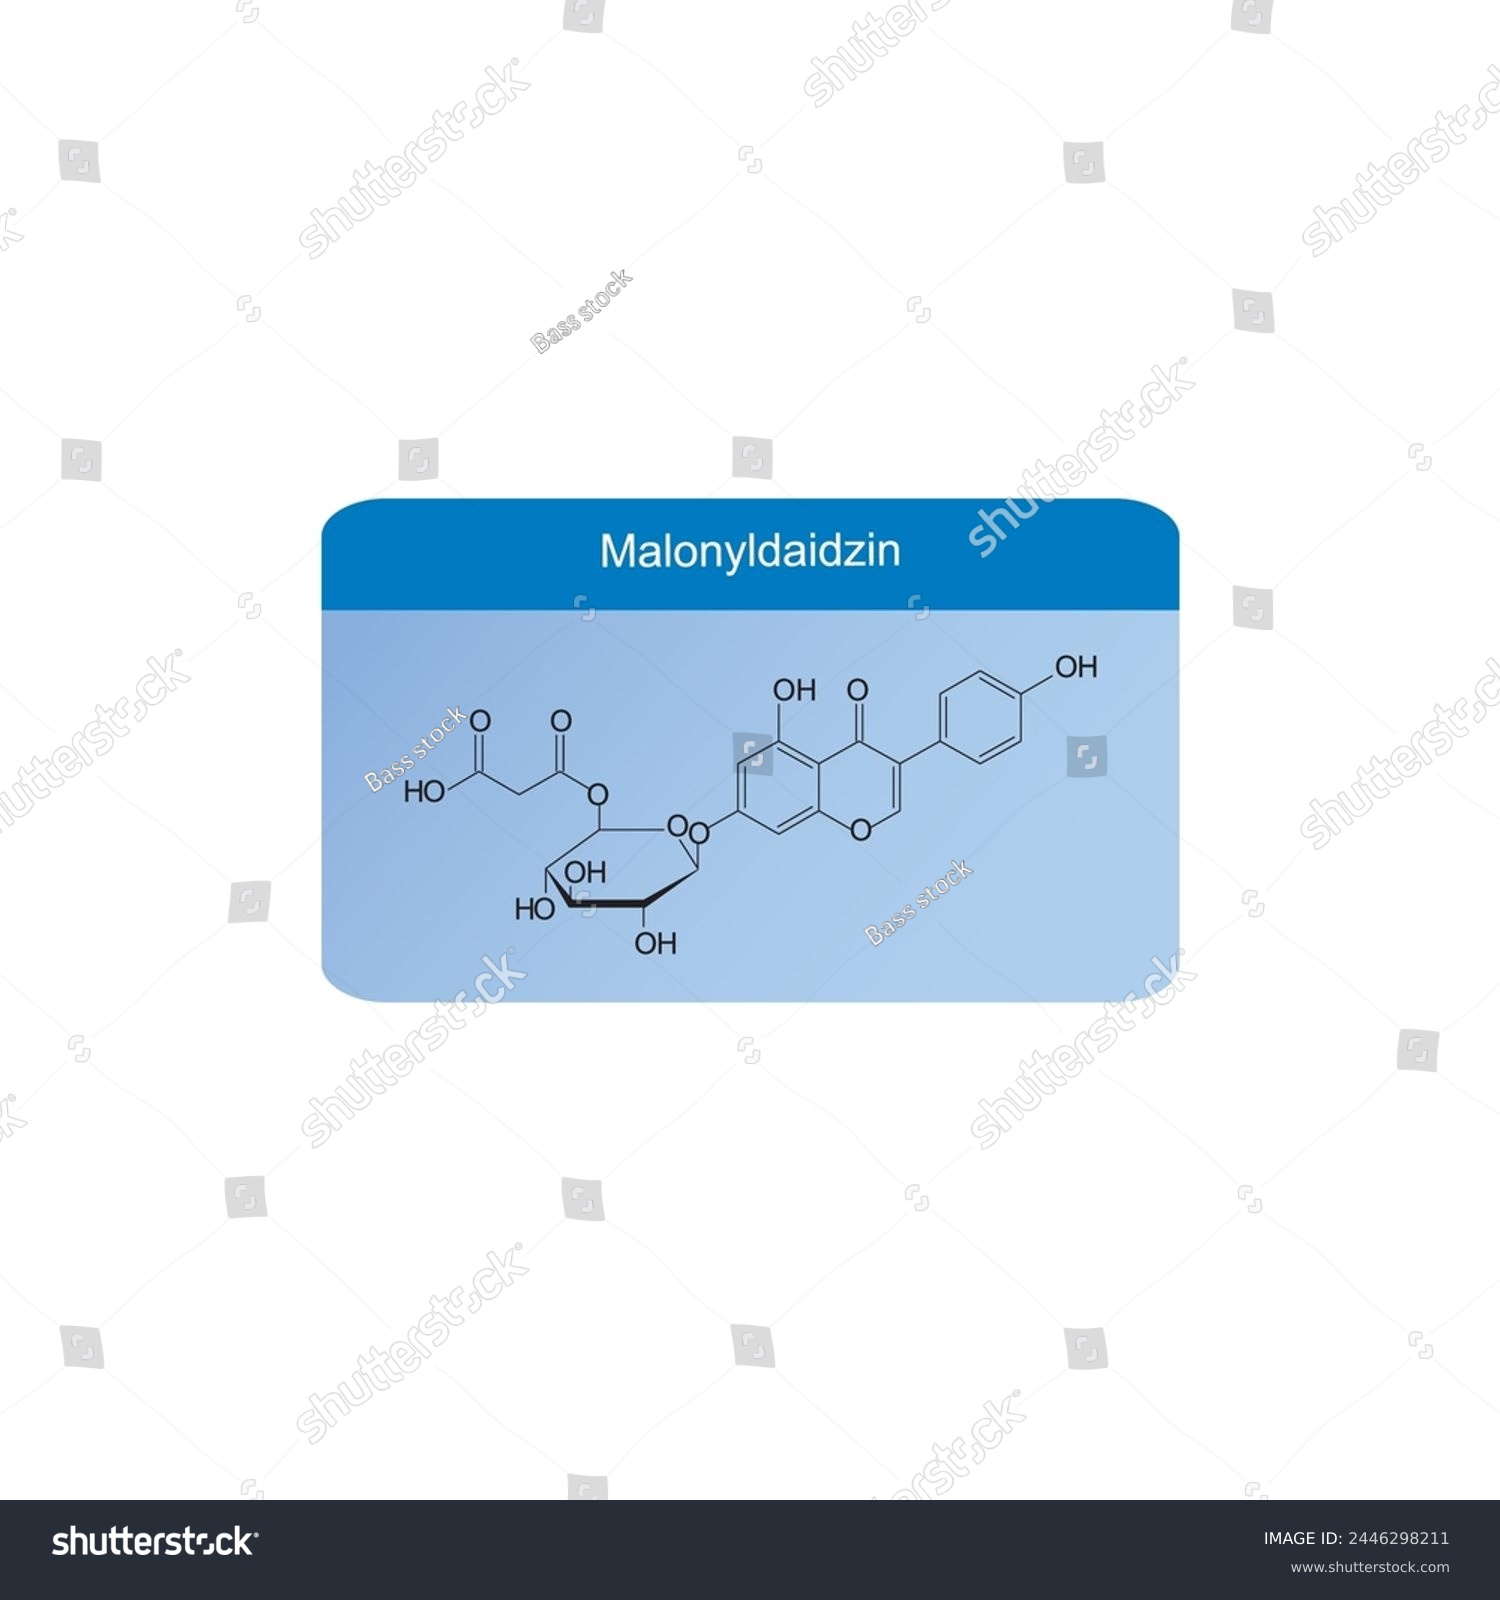 SVG of Malonylgenistin skeletal structure diagram.Isoflavanone compound molecule scientific illustration on blue background. svg